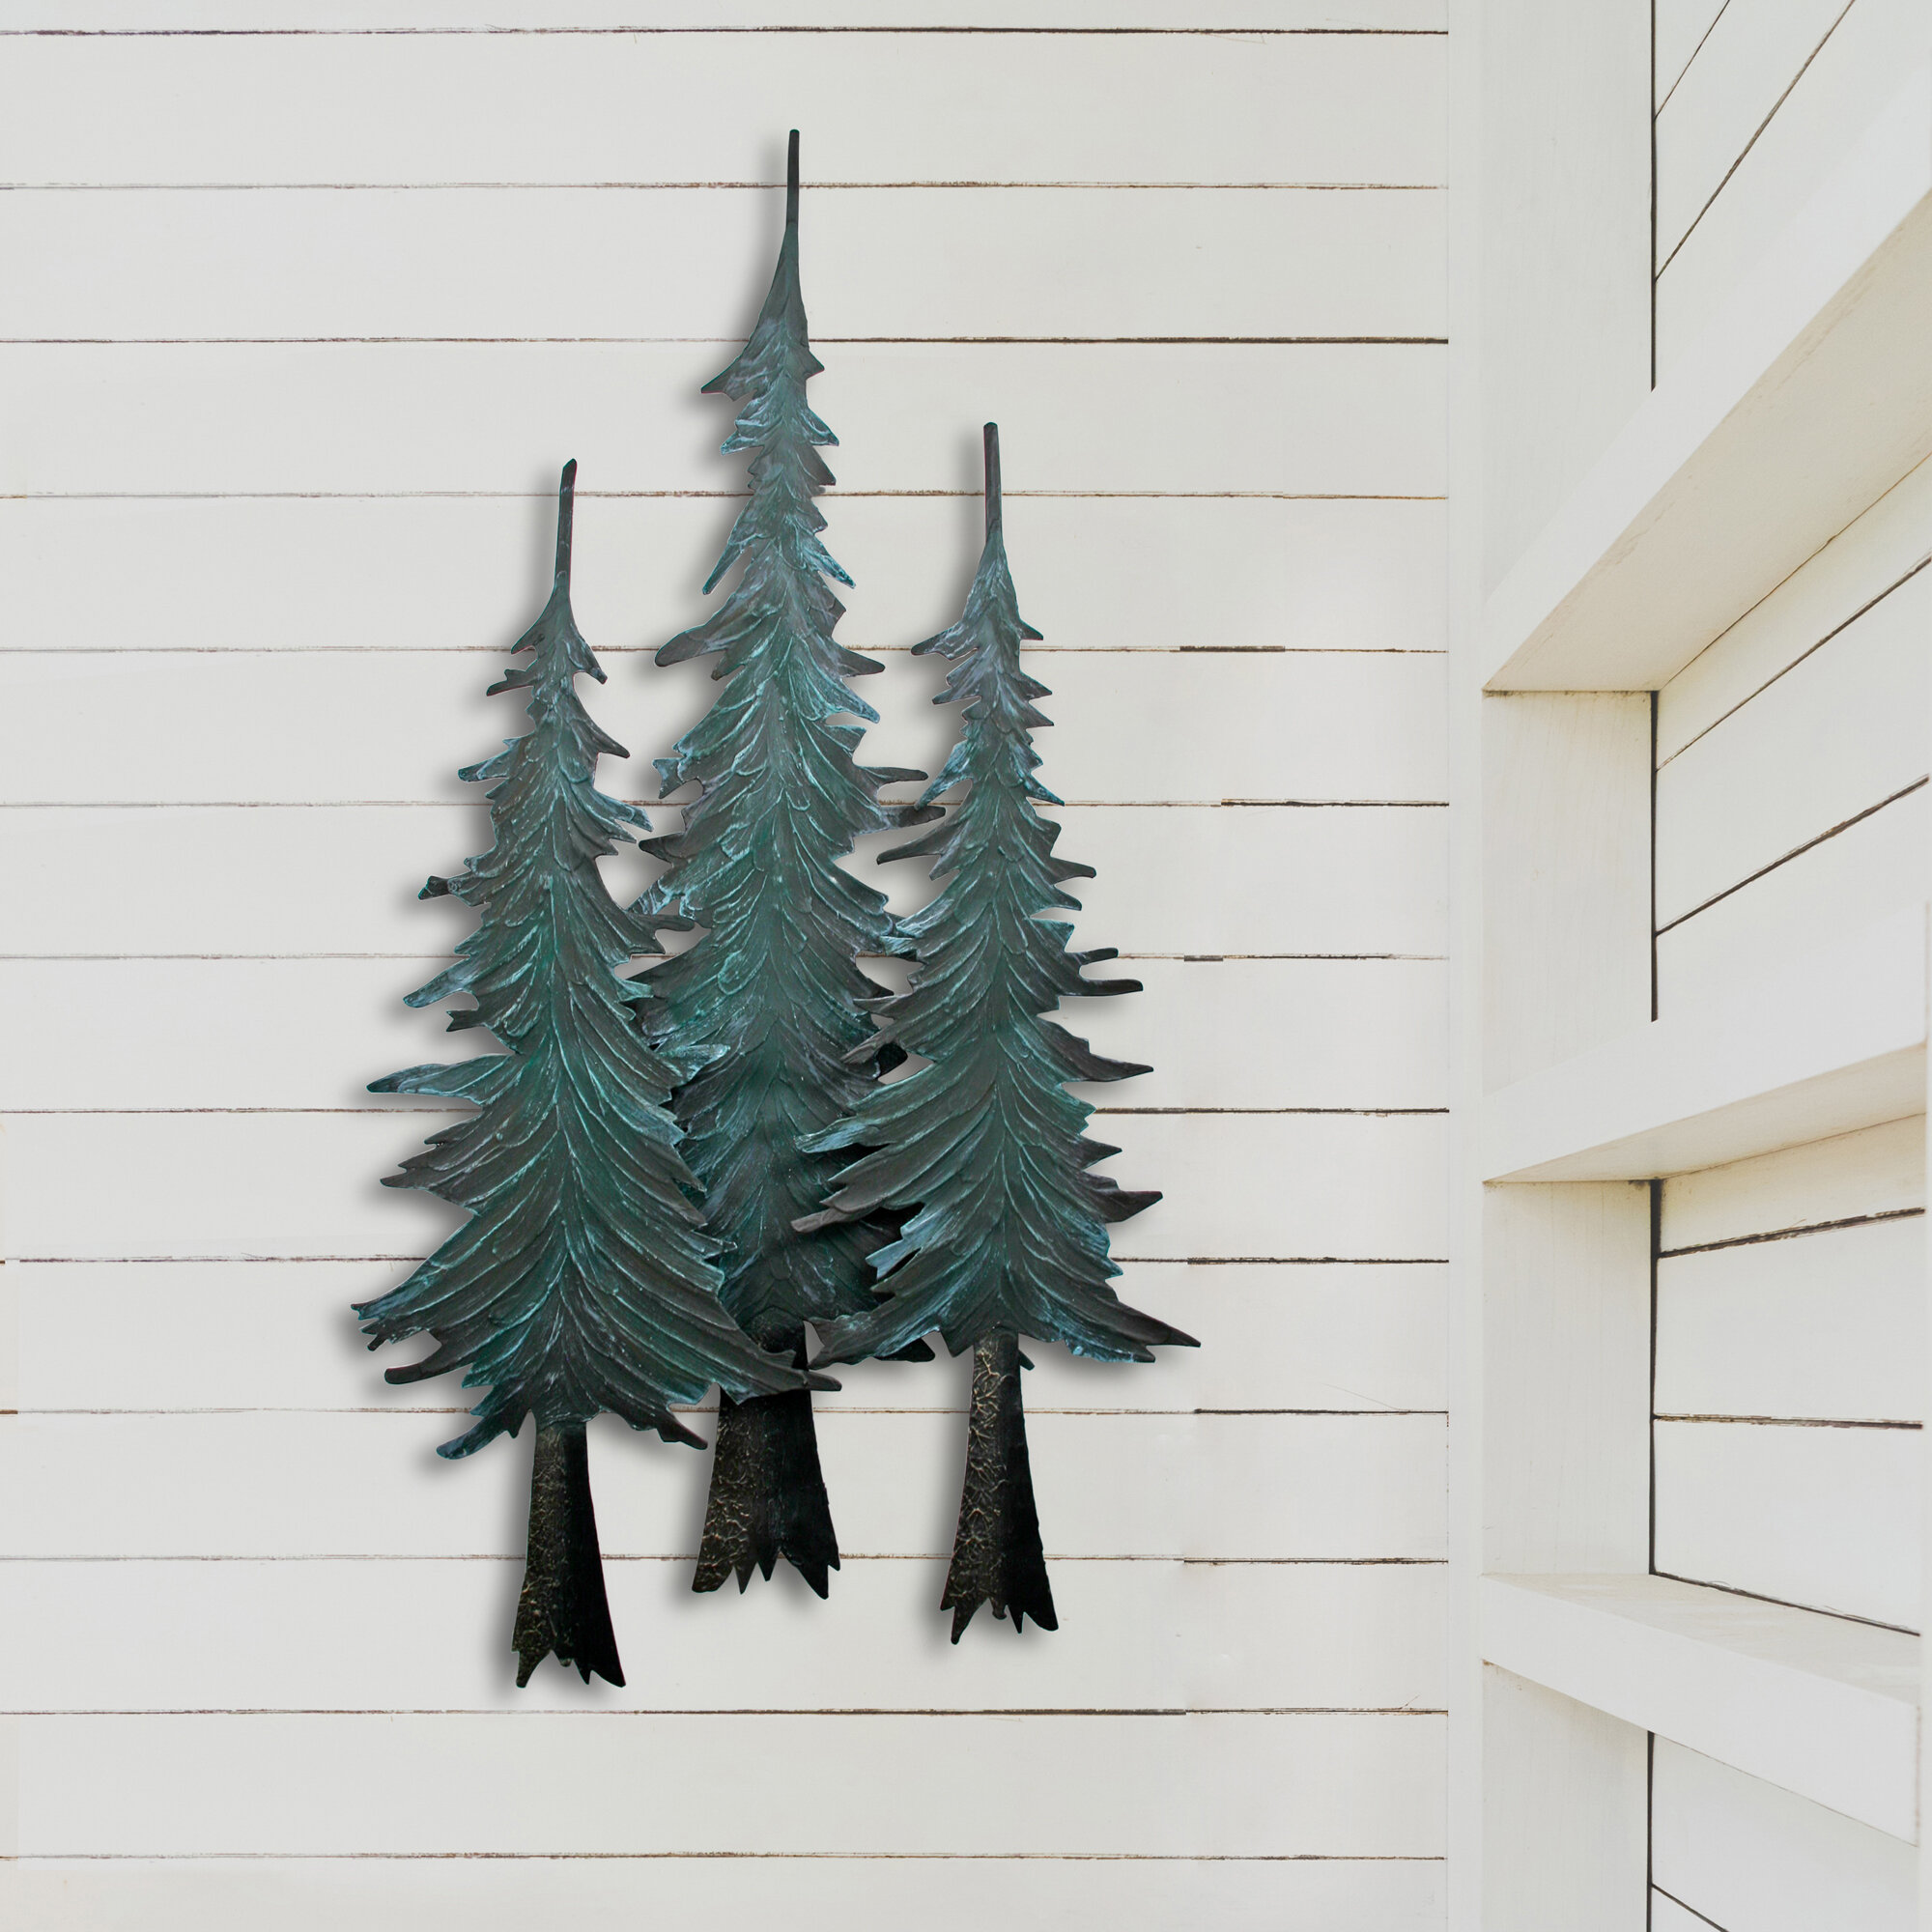 Millwood Pines Pine Trees 3 Metal Wall Decor Reviews Wayfair